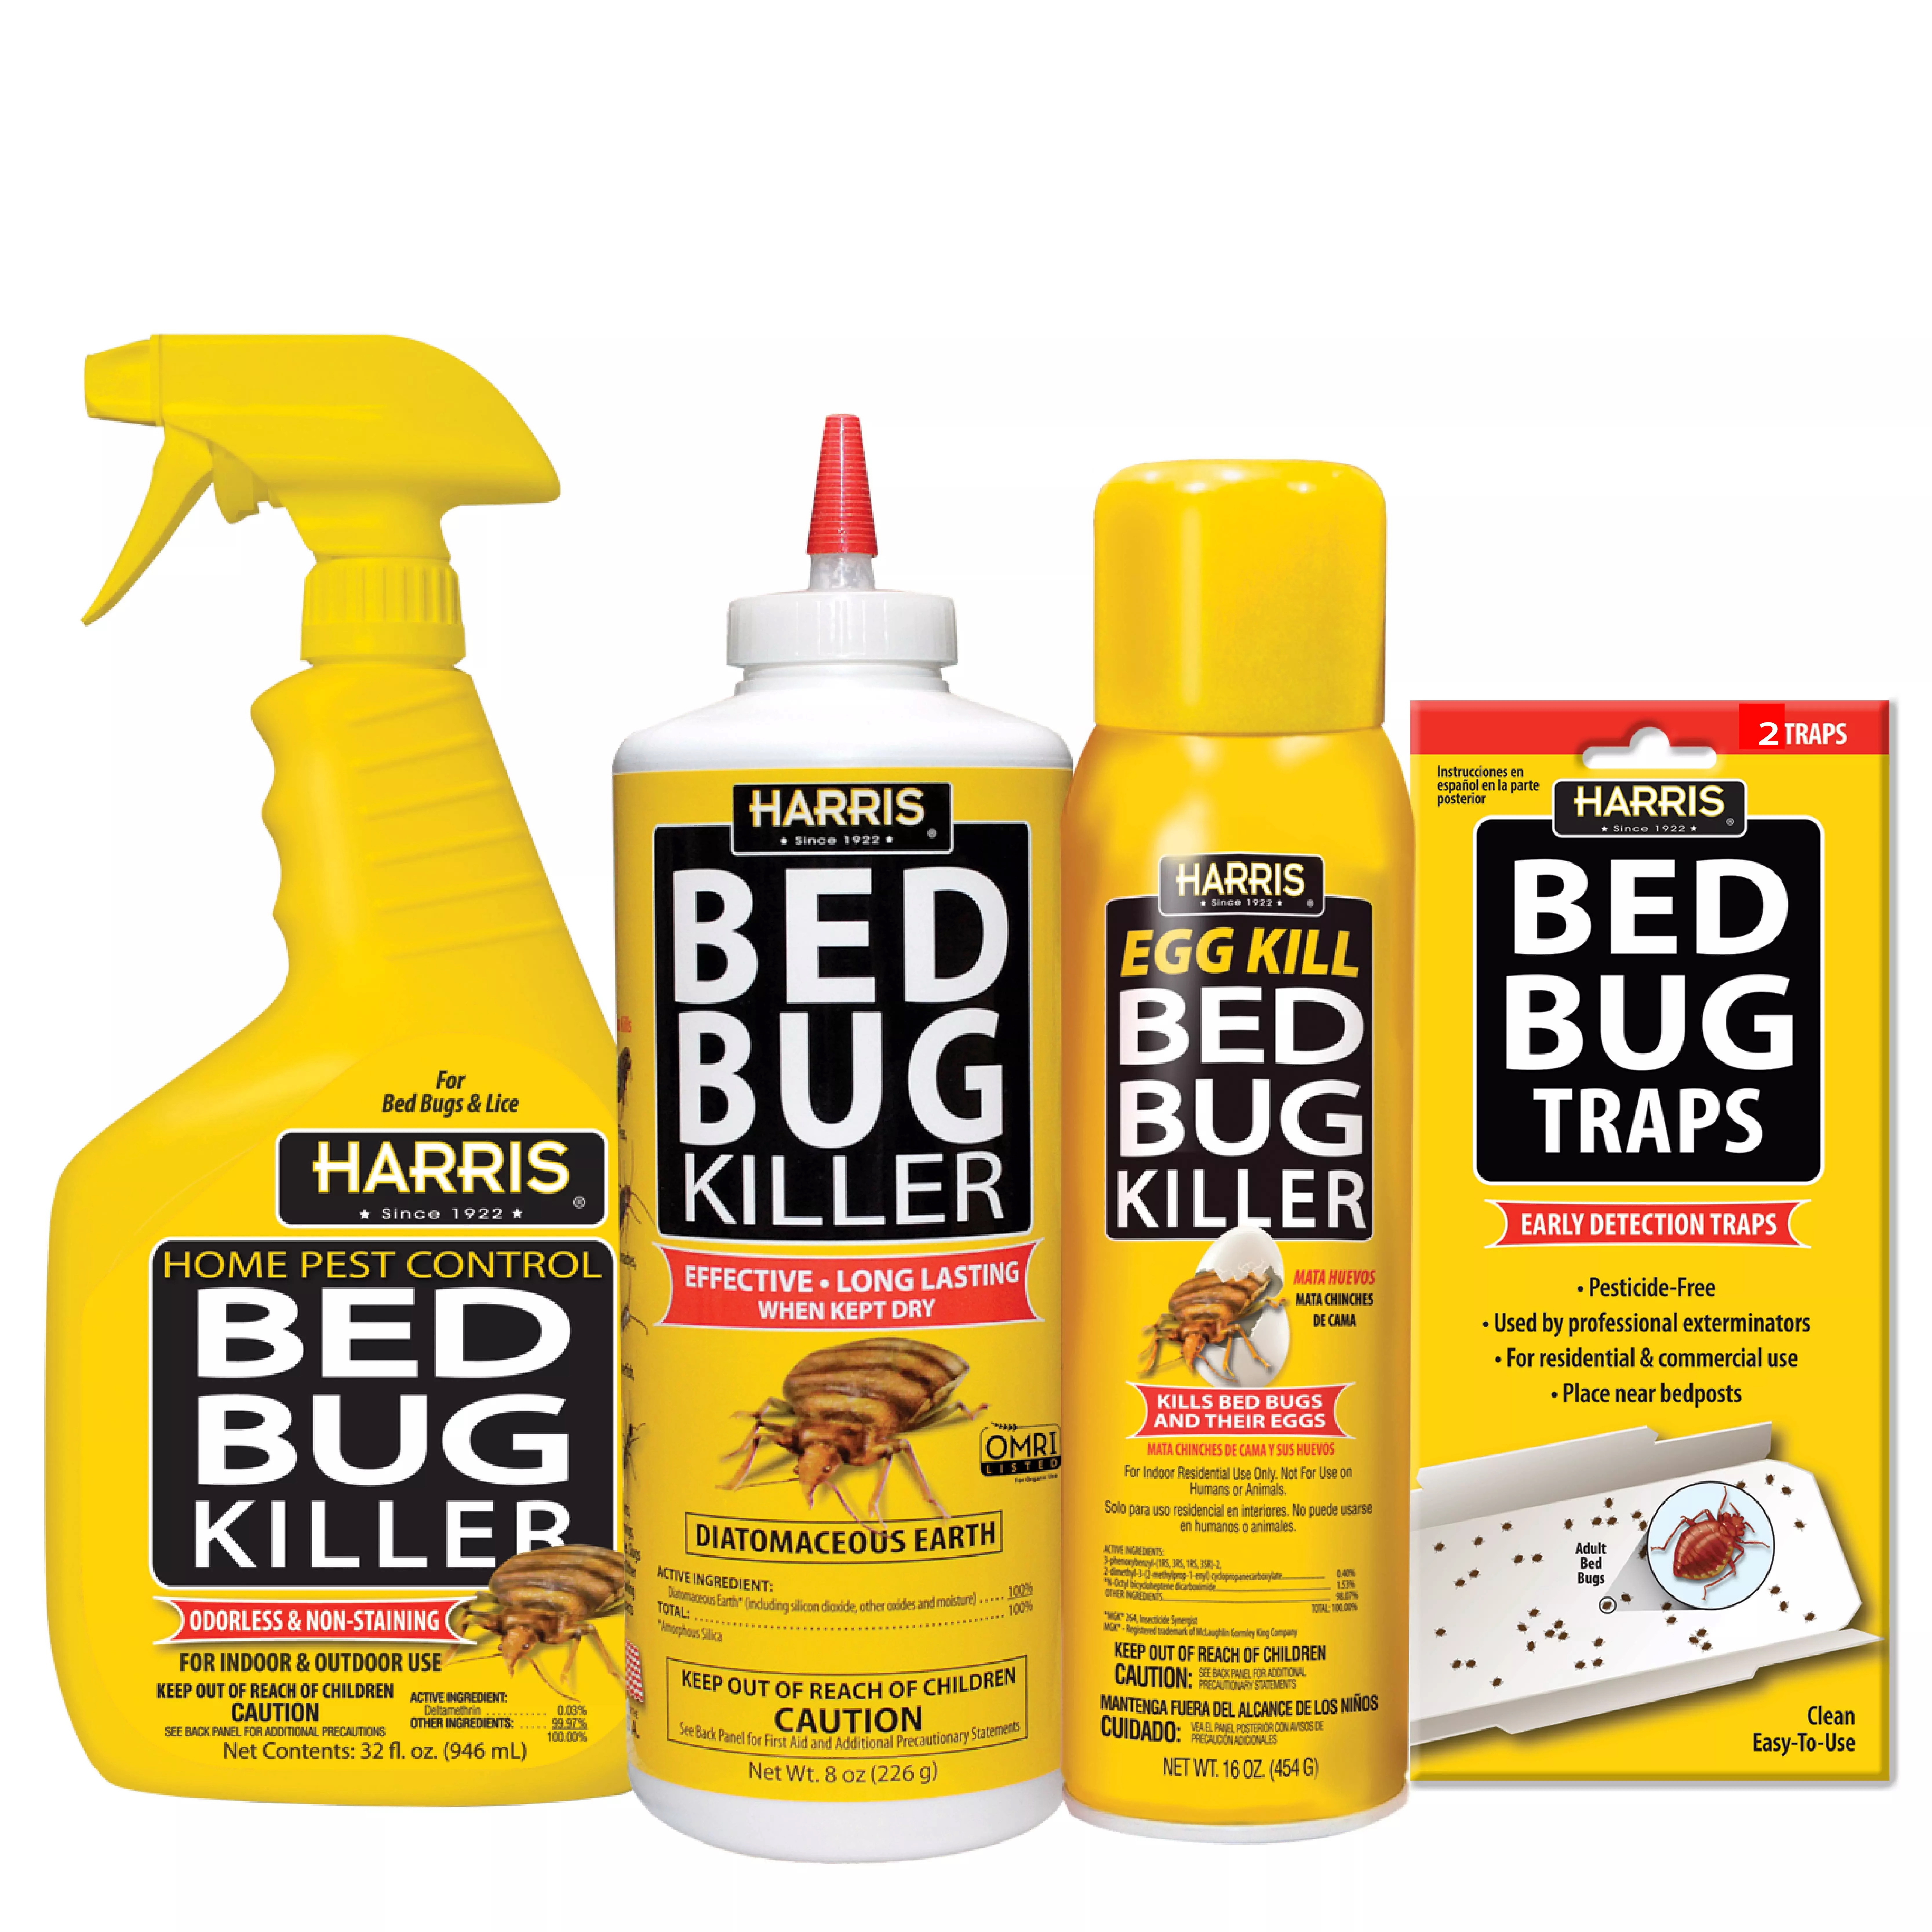 BB-KIT Bed Bug Value Kit, Bed Posts, Box Springs, Carpets, Linens, Mattresses